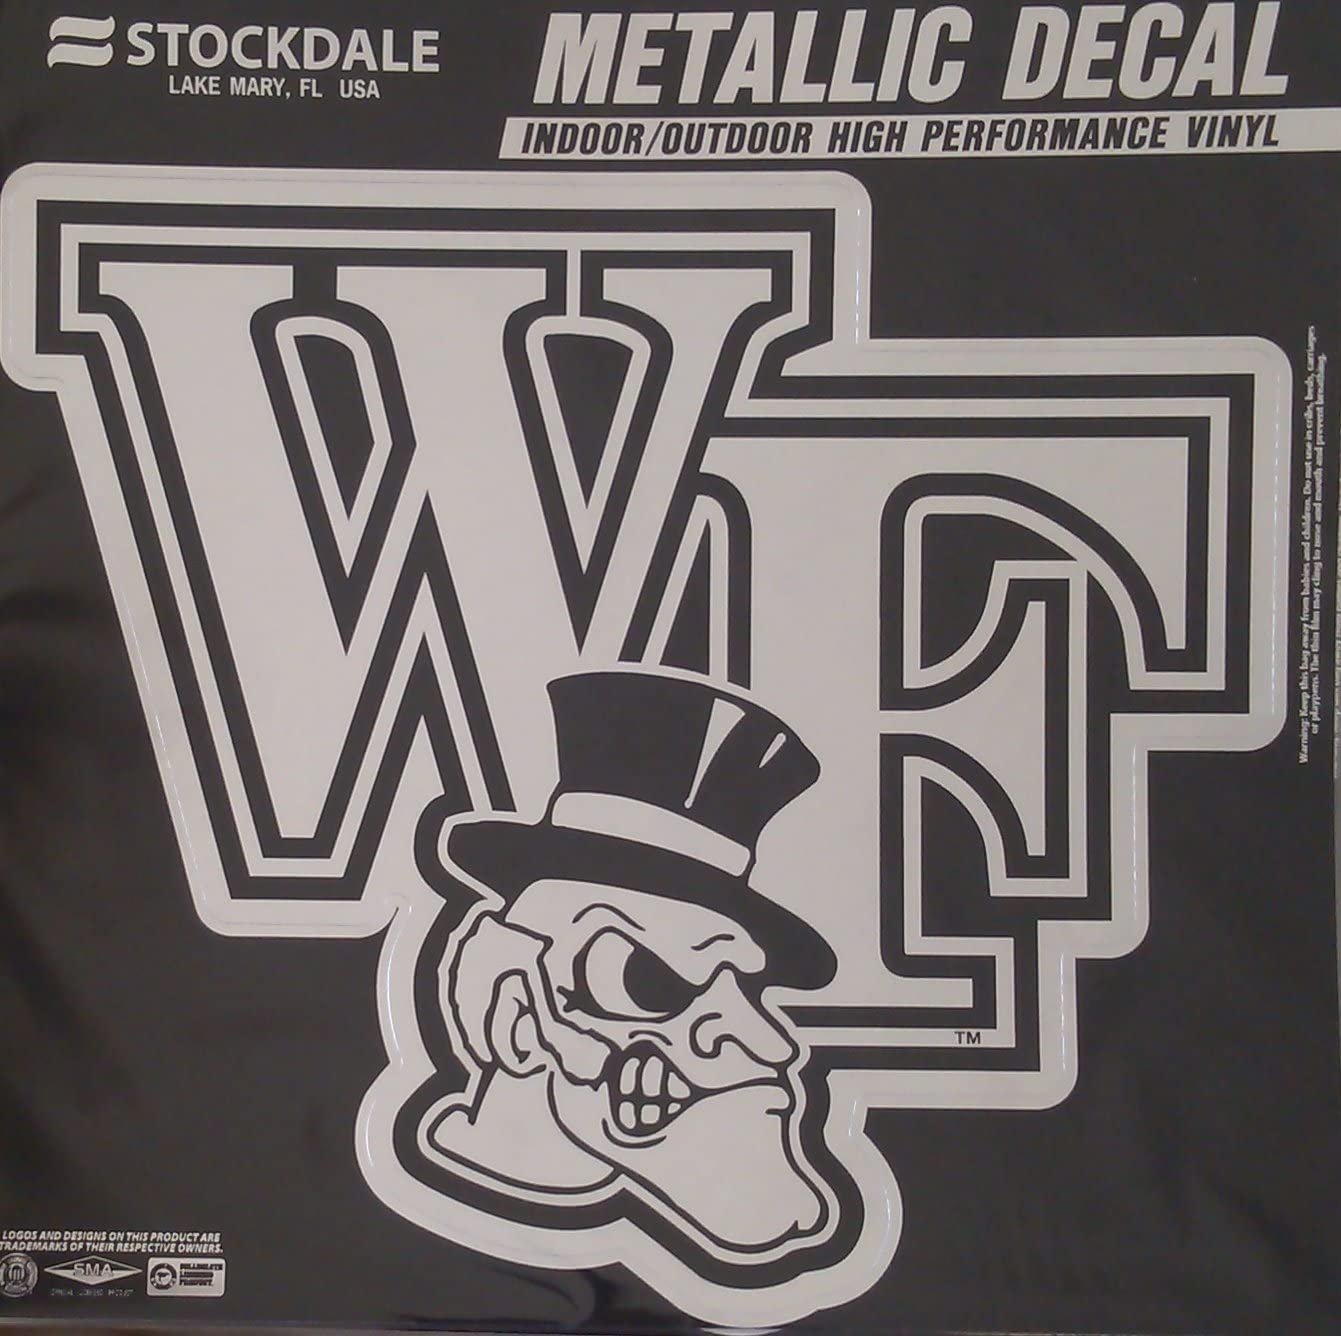 Wake Forest Demon Deacons 6 Inch Decal Sticker, Metallic Chrome Shimmer Design, Vinyl Die Cut, Auto Home